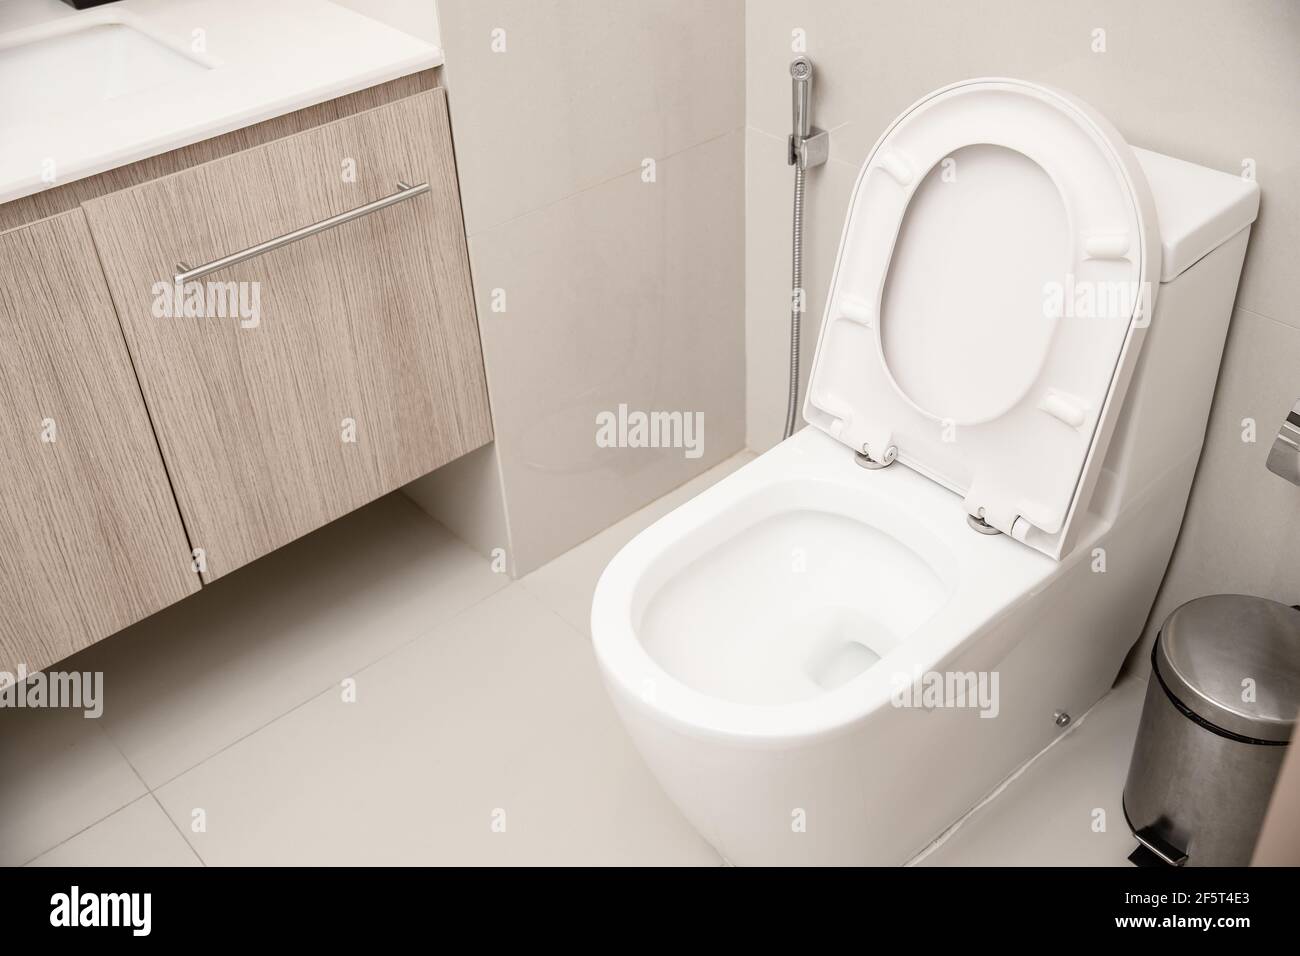 Clean Toilet bowl in hotel bathroom interior decoration Stock Photo